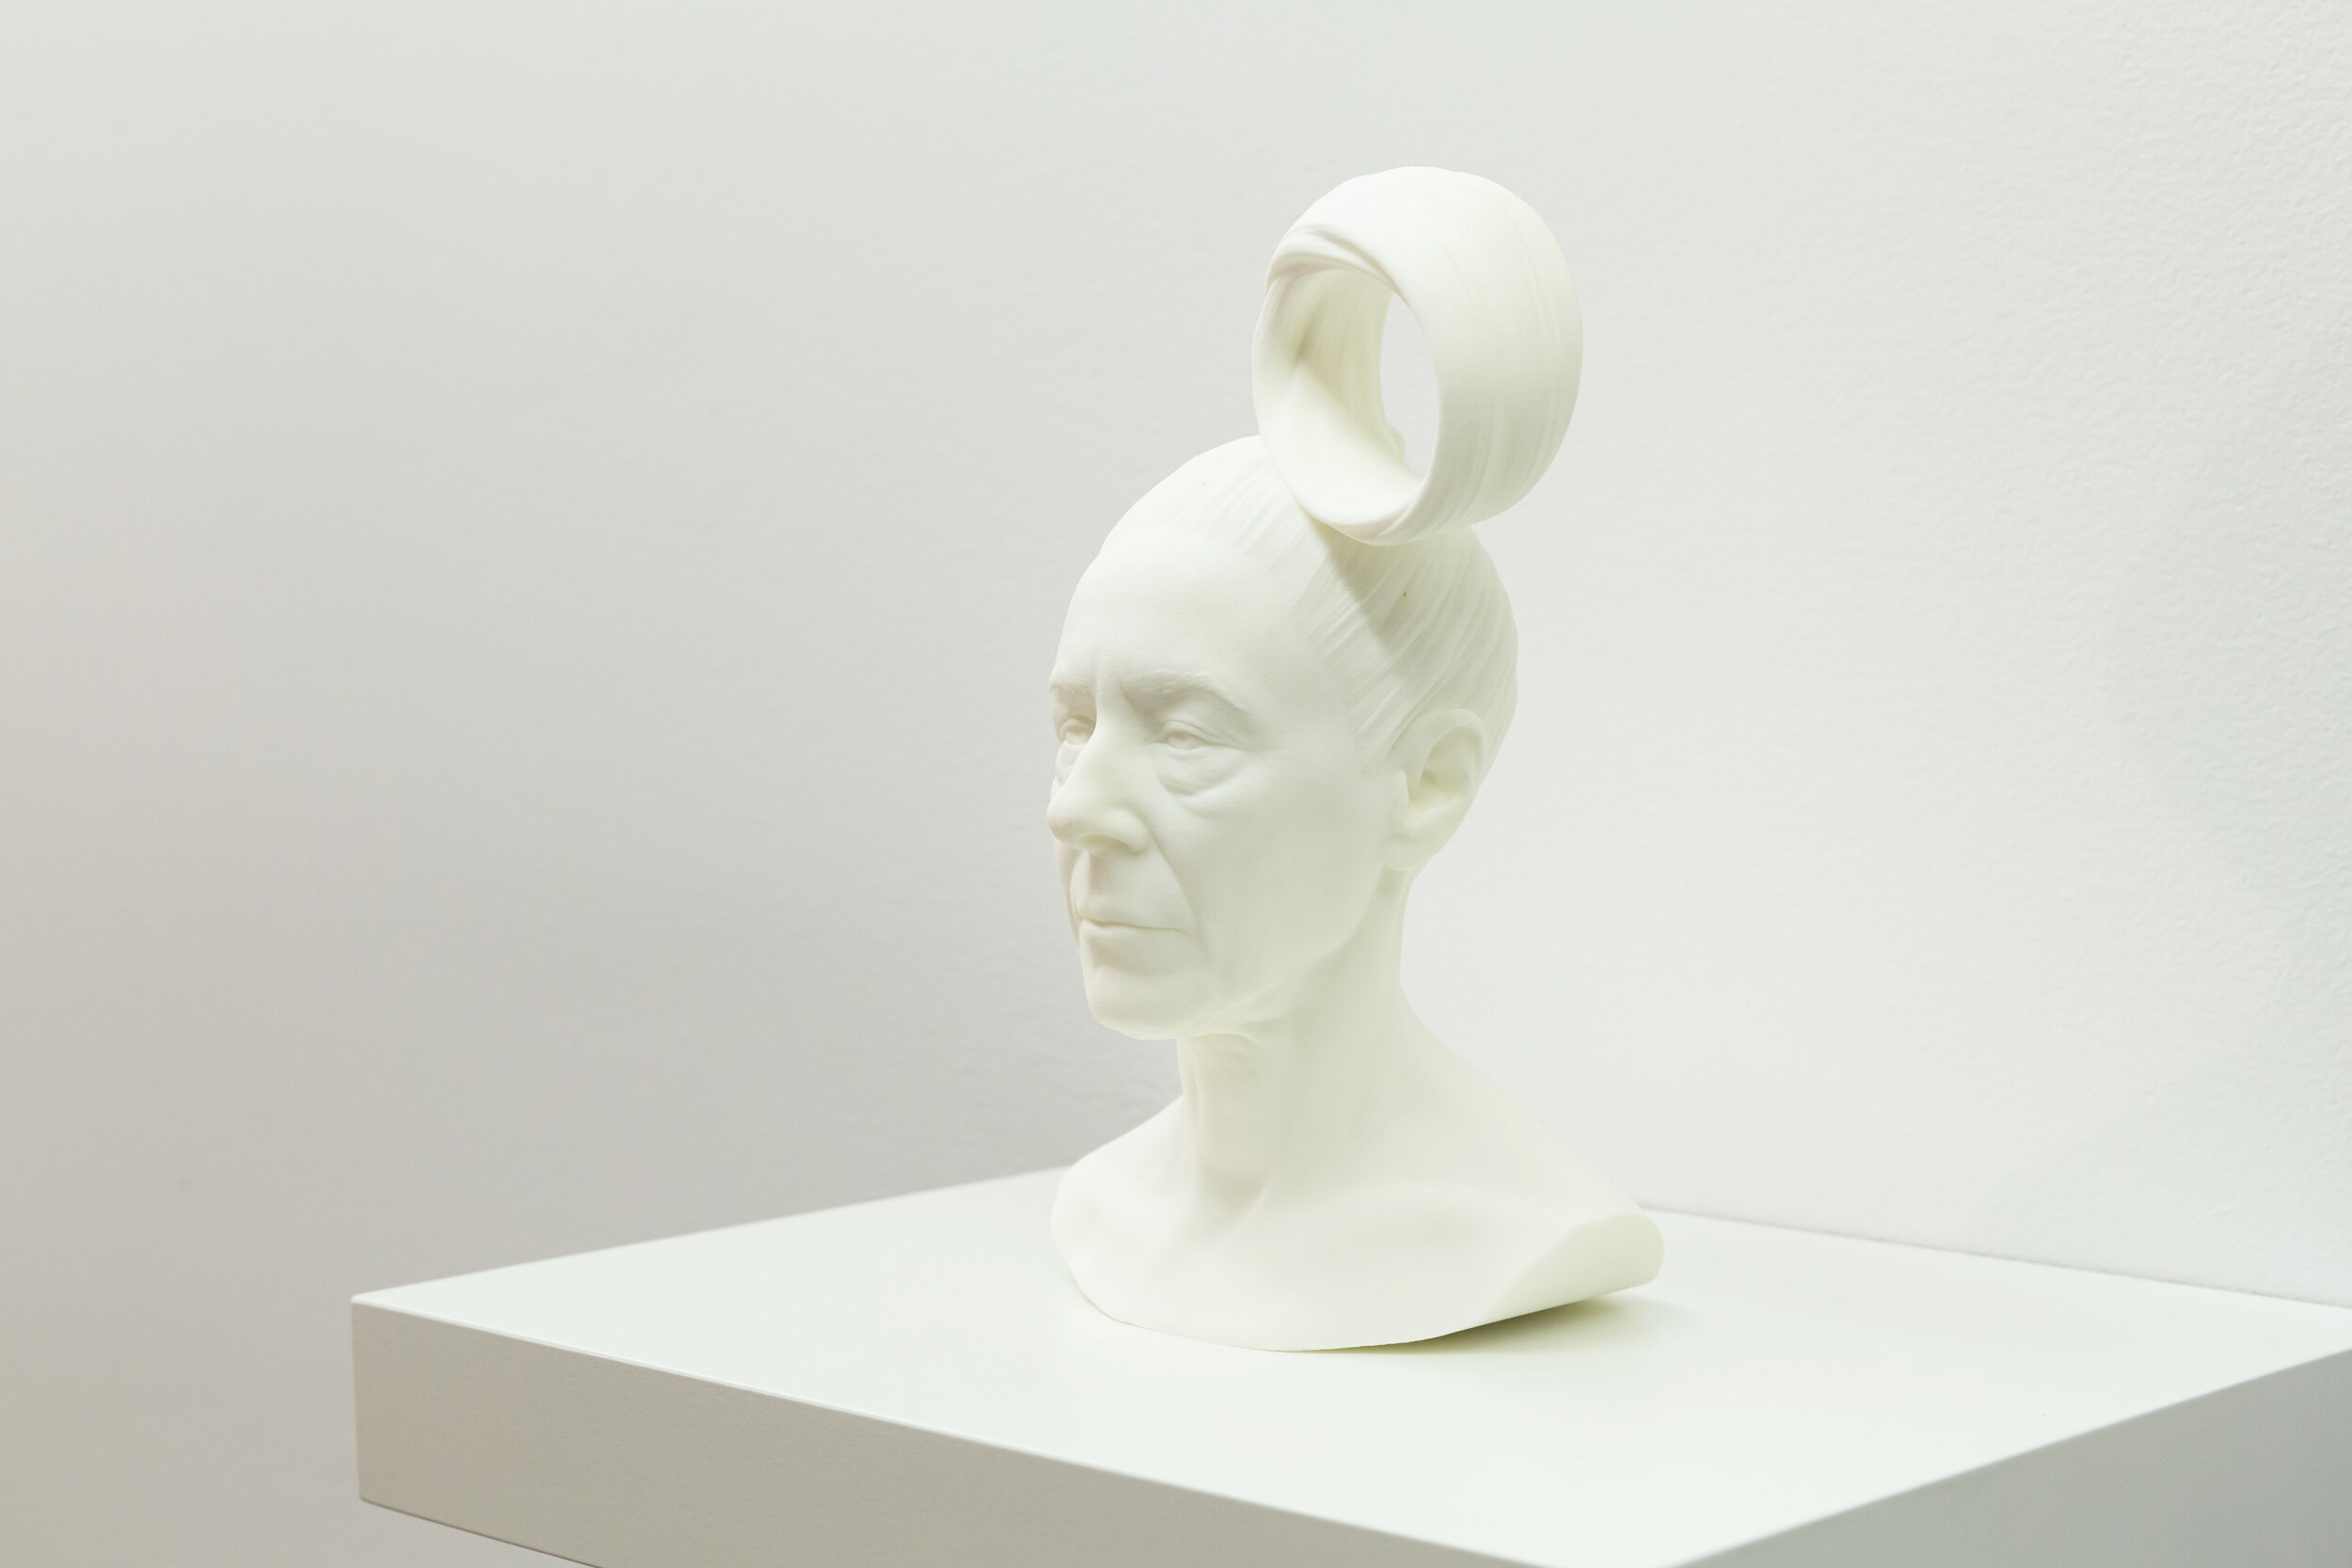  Susan Silas  Avatar (model for a bronze sculpture), 2019  sintered polyester 